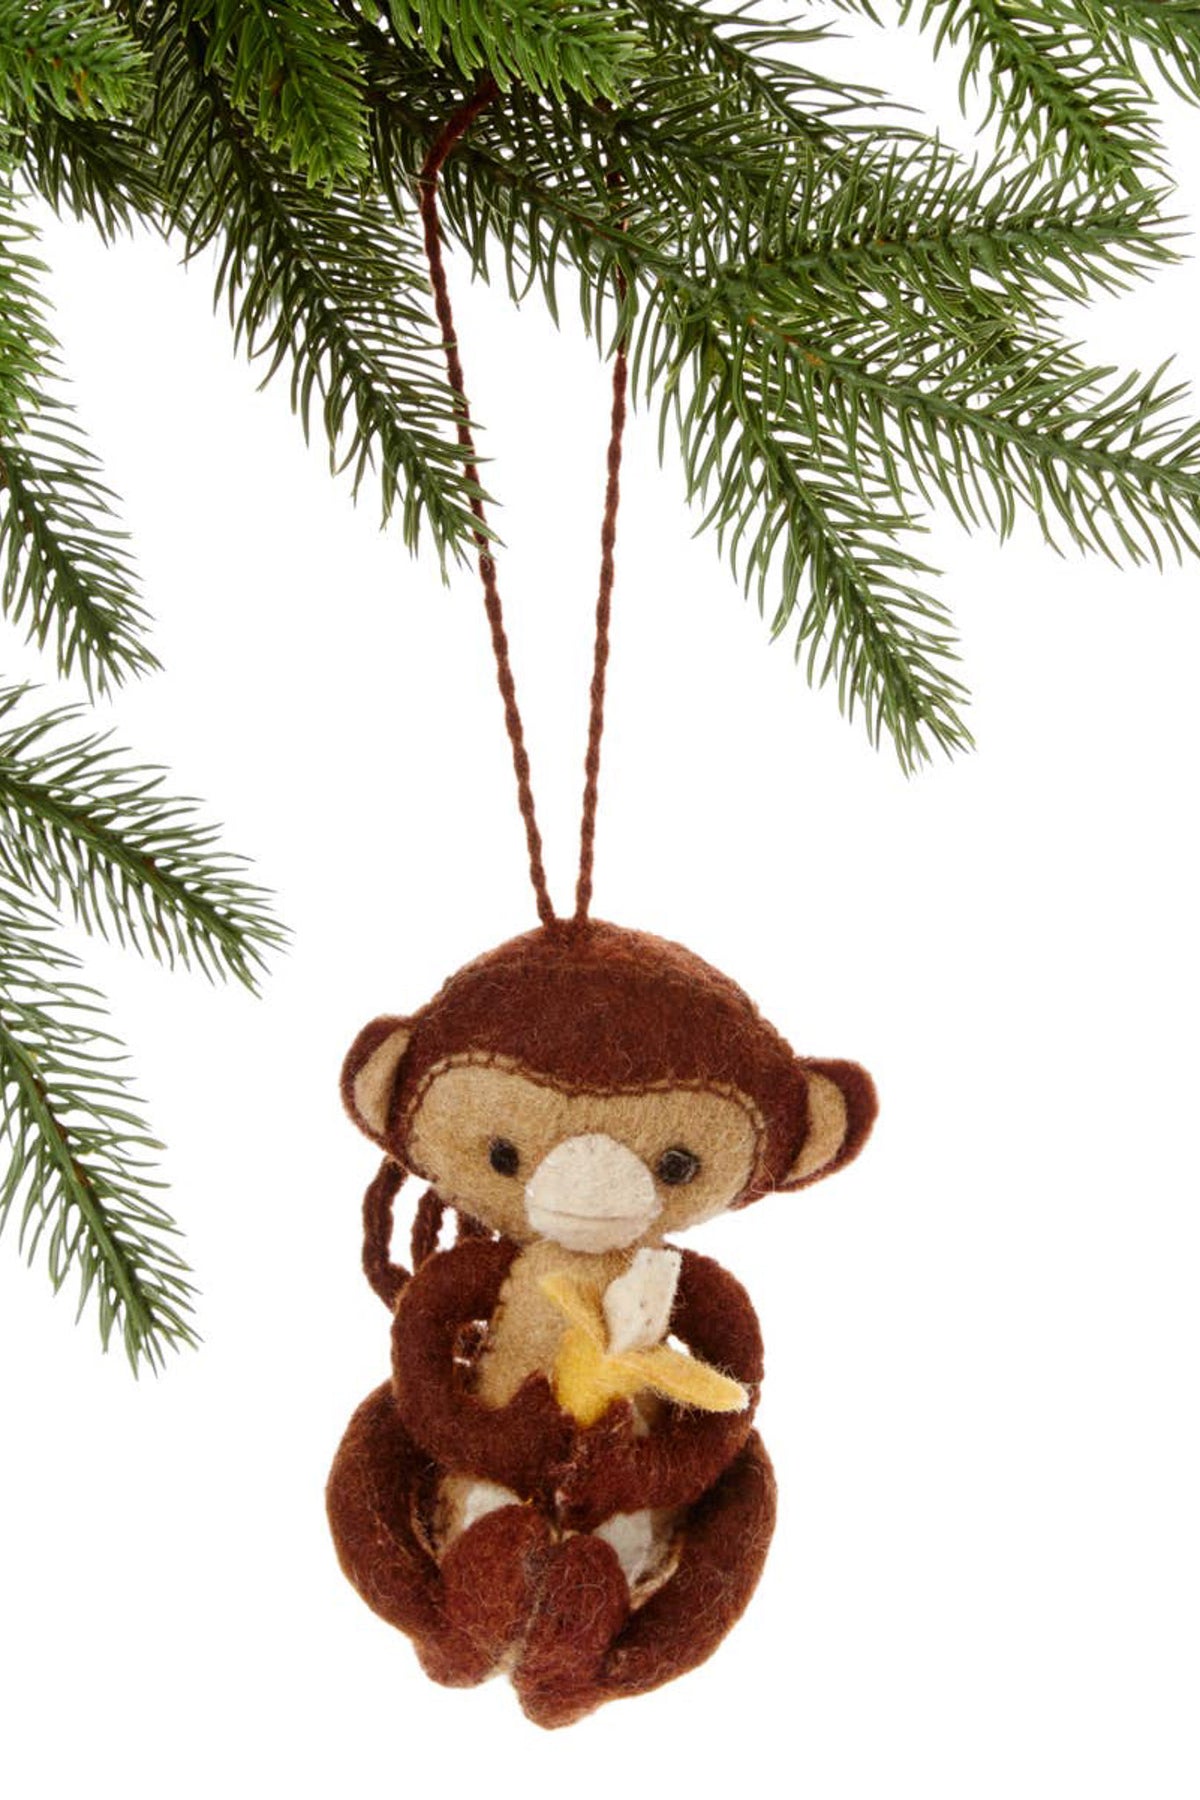 Silk Road Bazaar Monkey Ornament